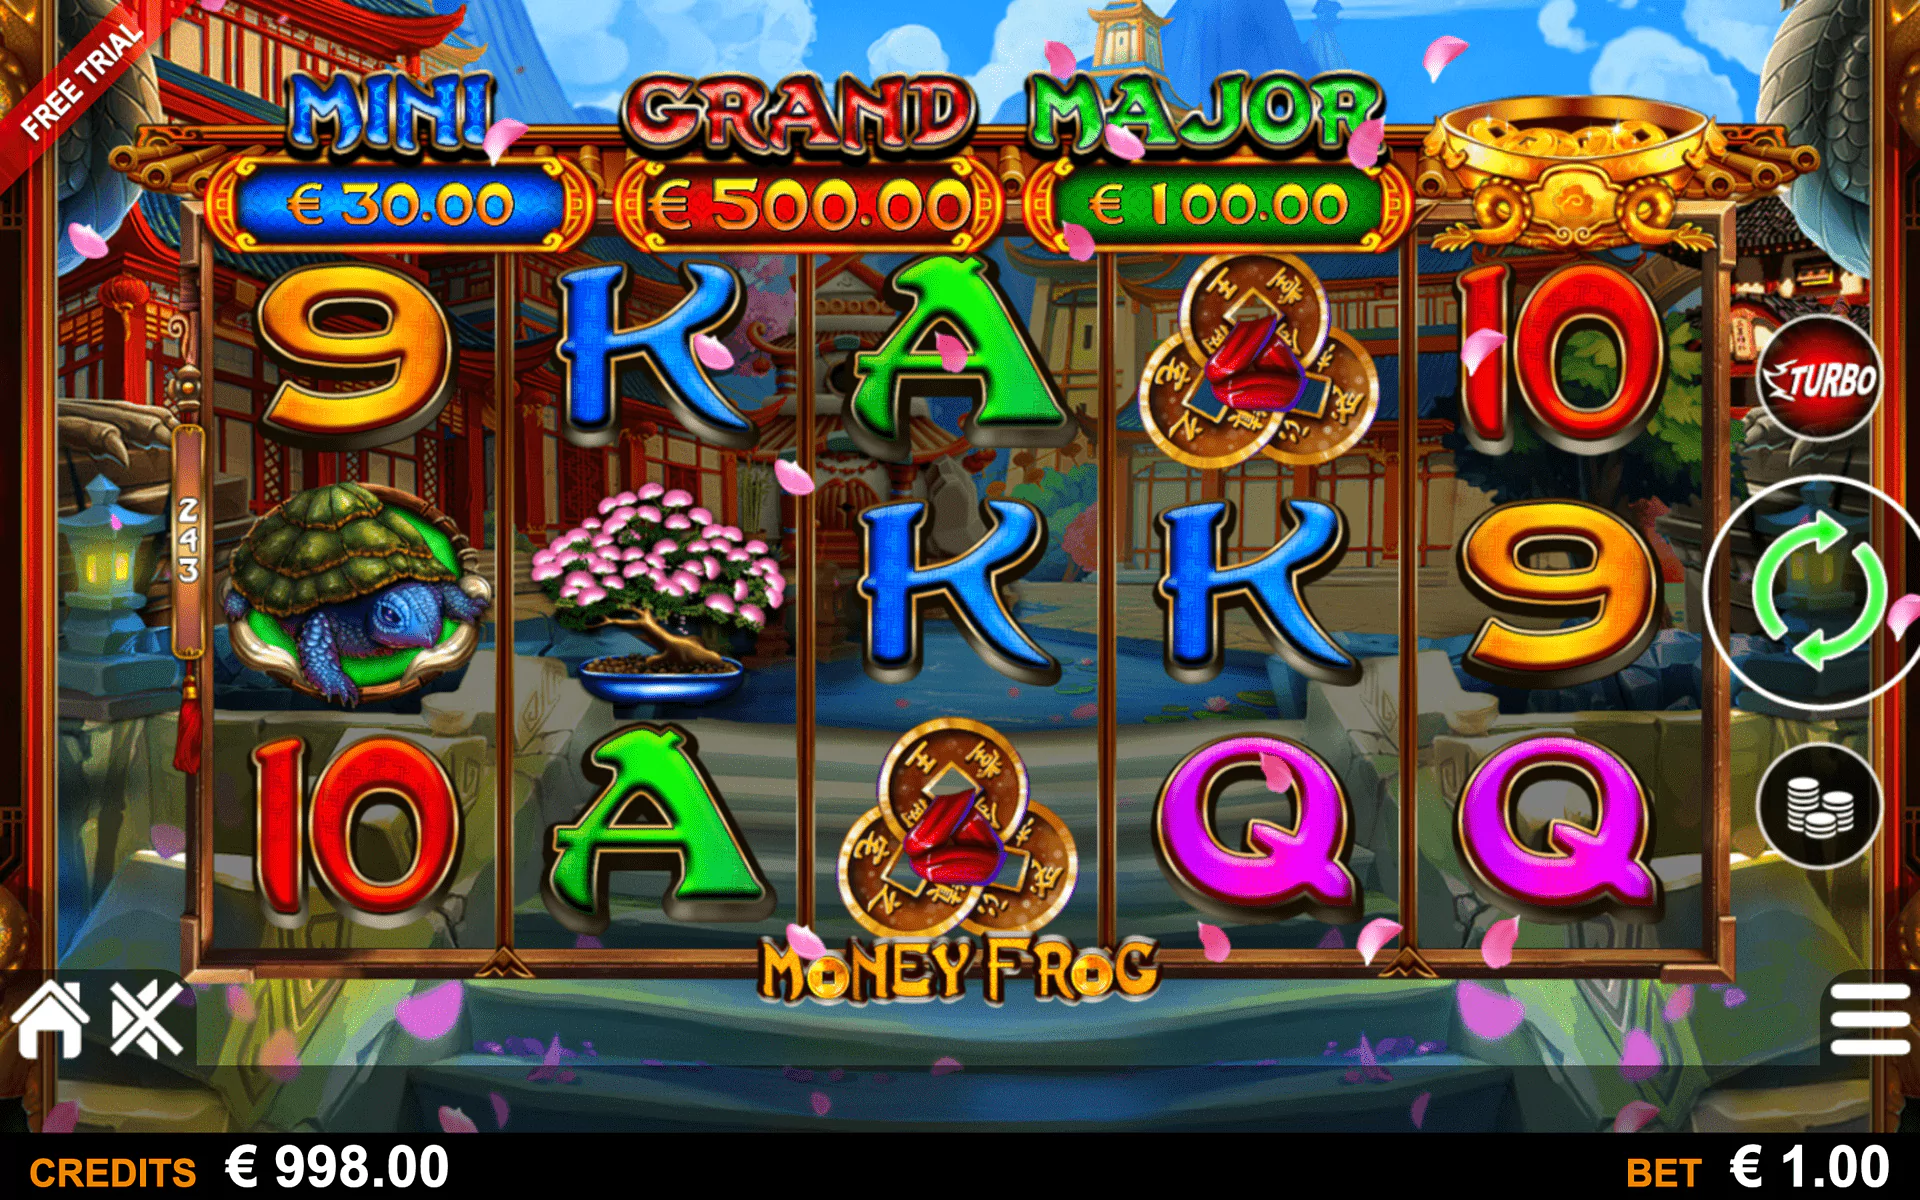 Screenshot of the Money Frog Slot